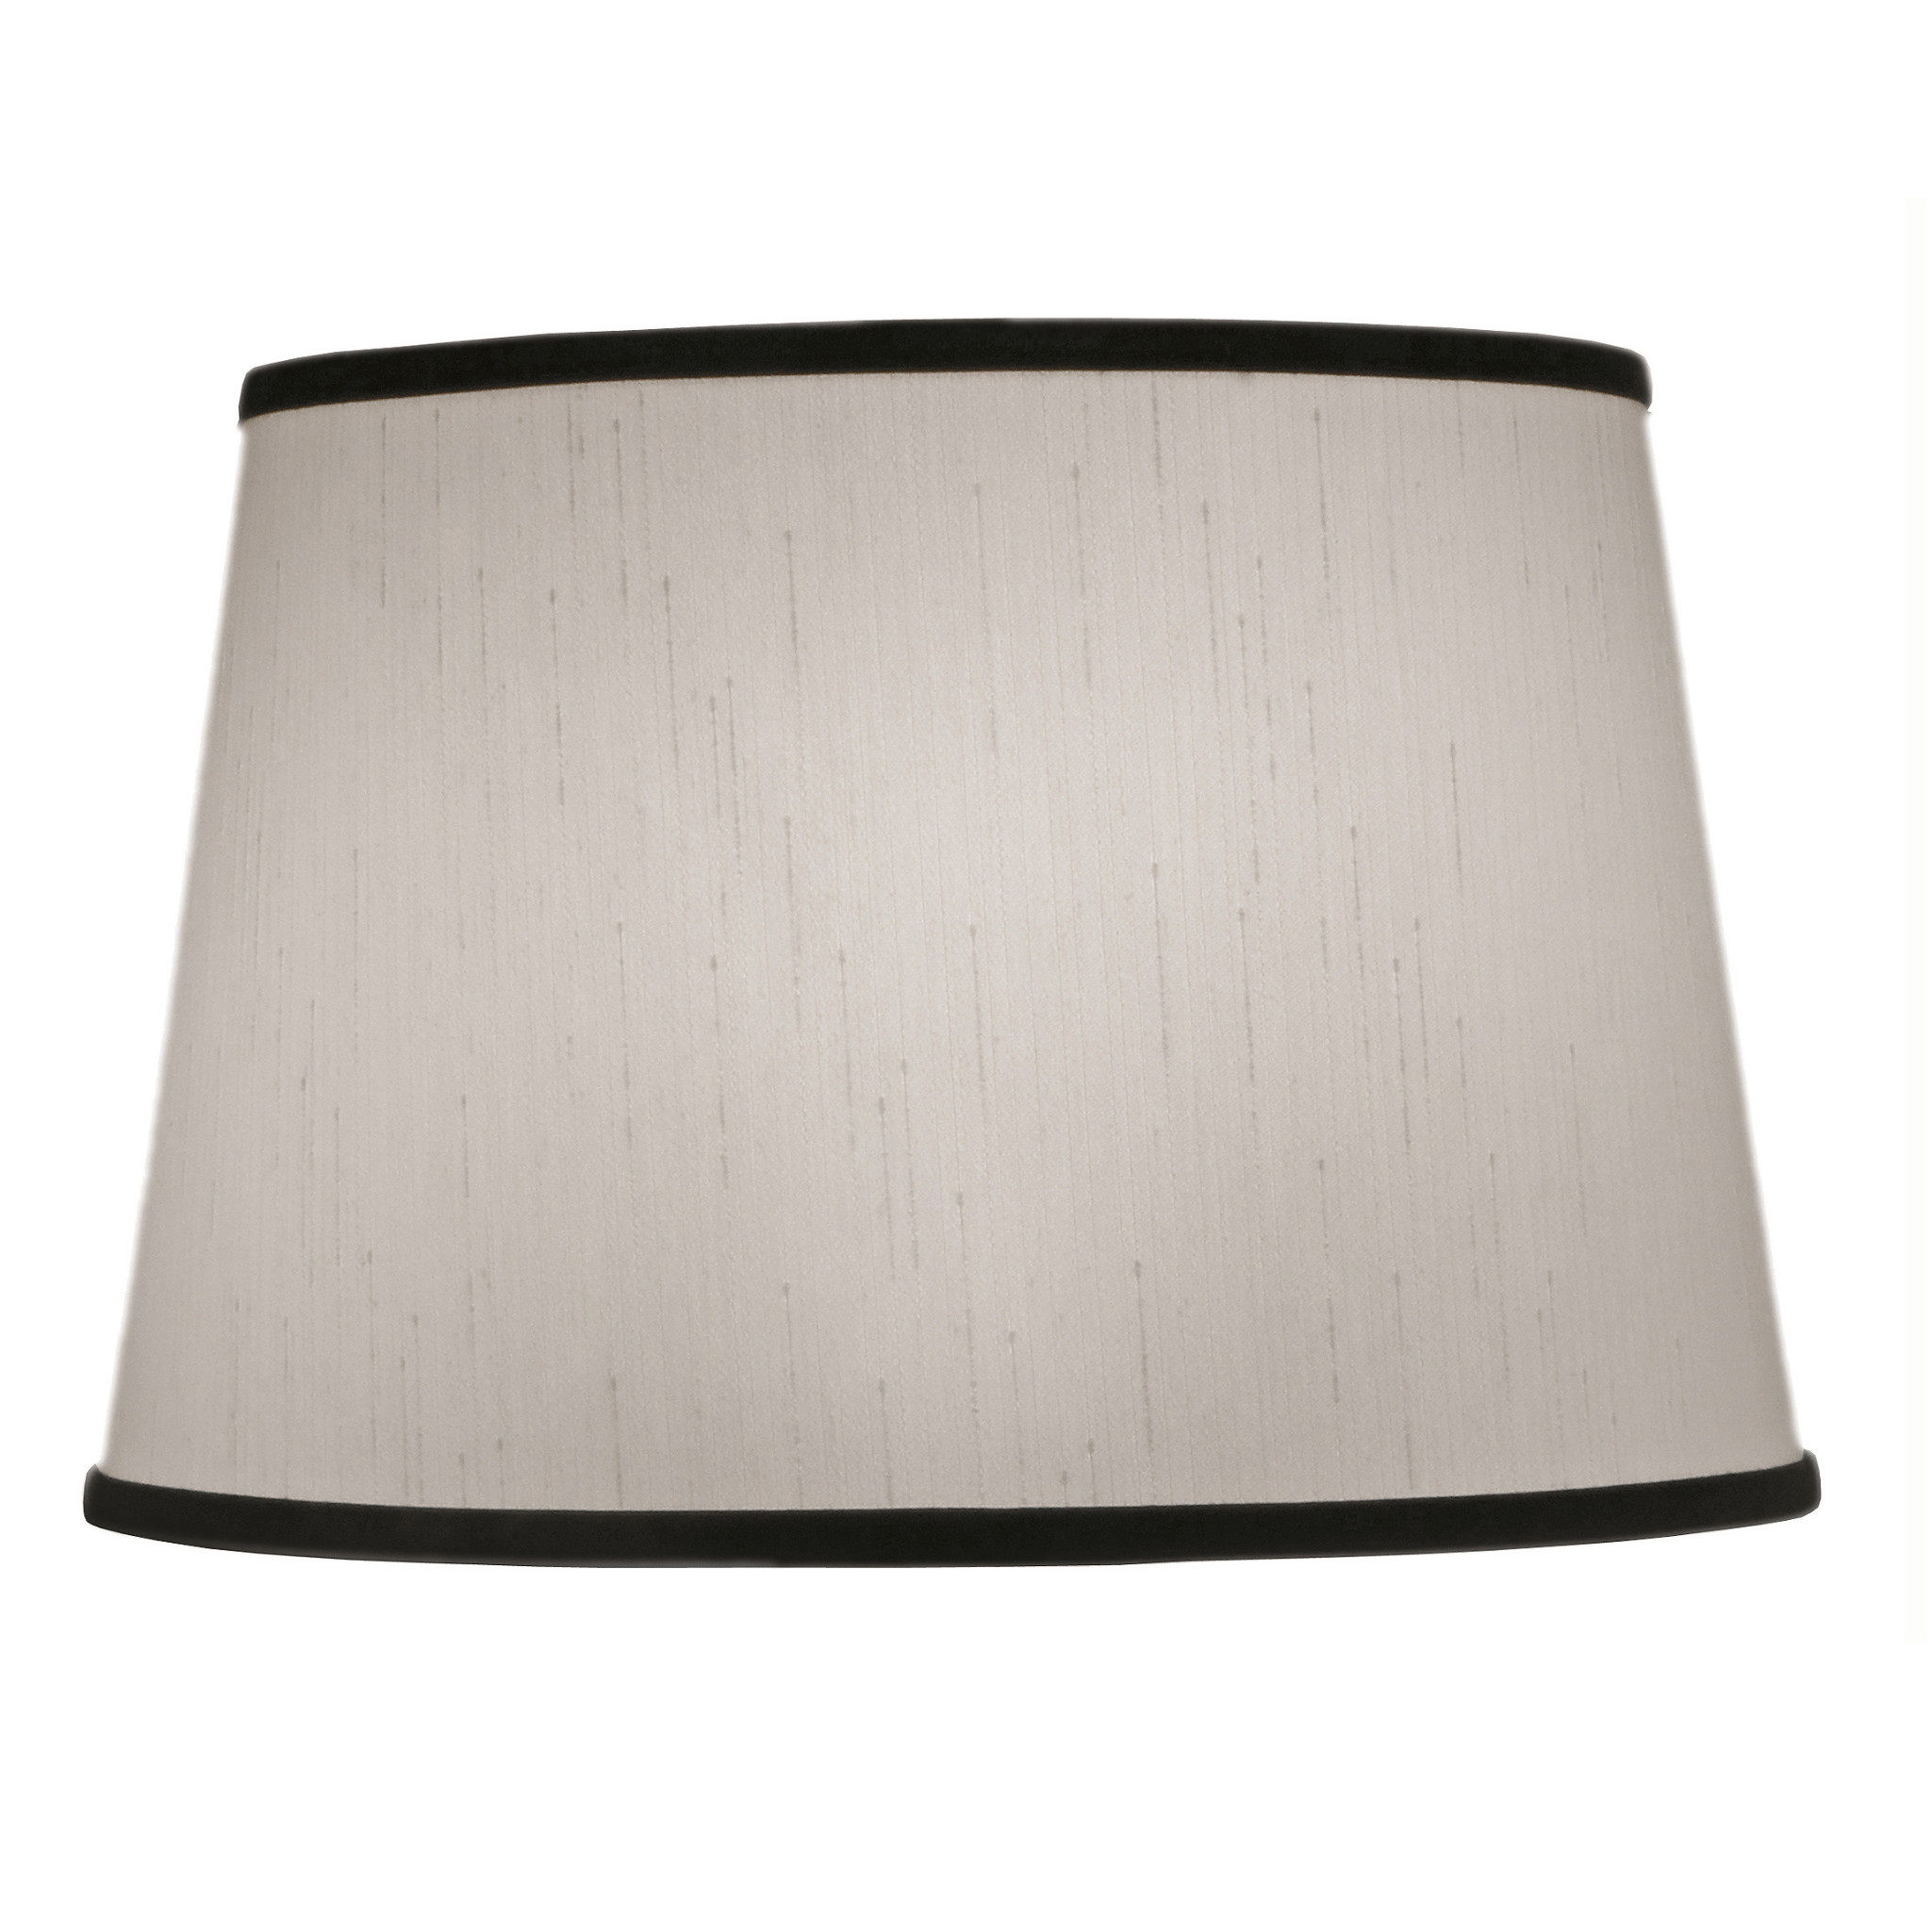 Stiffel lamp shade Global White Stiffel White Aberdeen Hardback Tapered Drum Lamp shade - 12 x 15 x 10